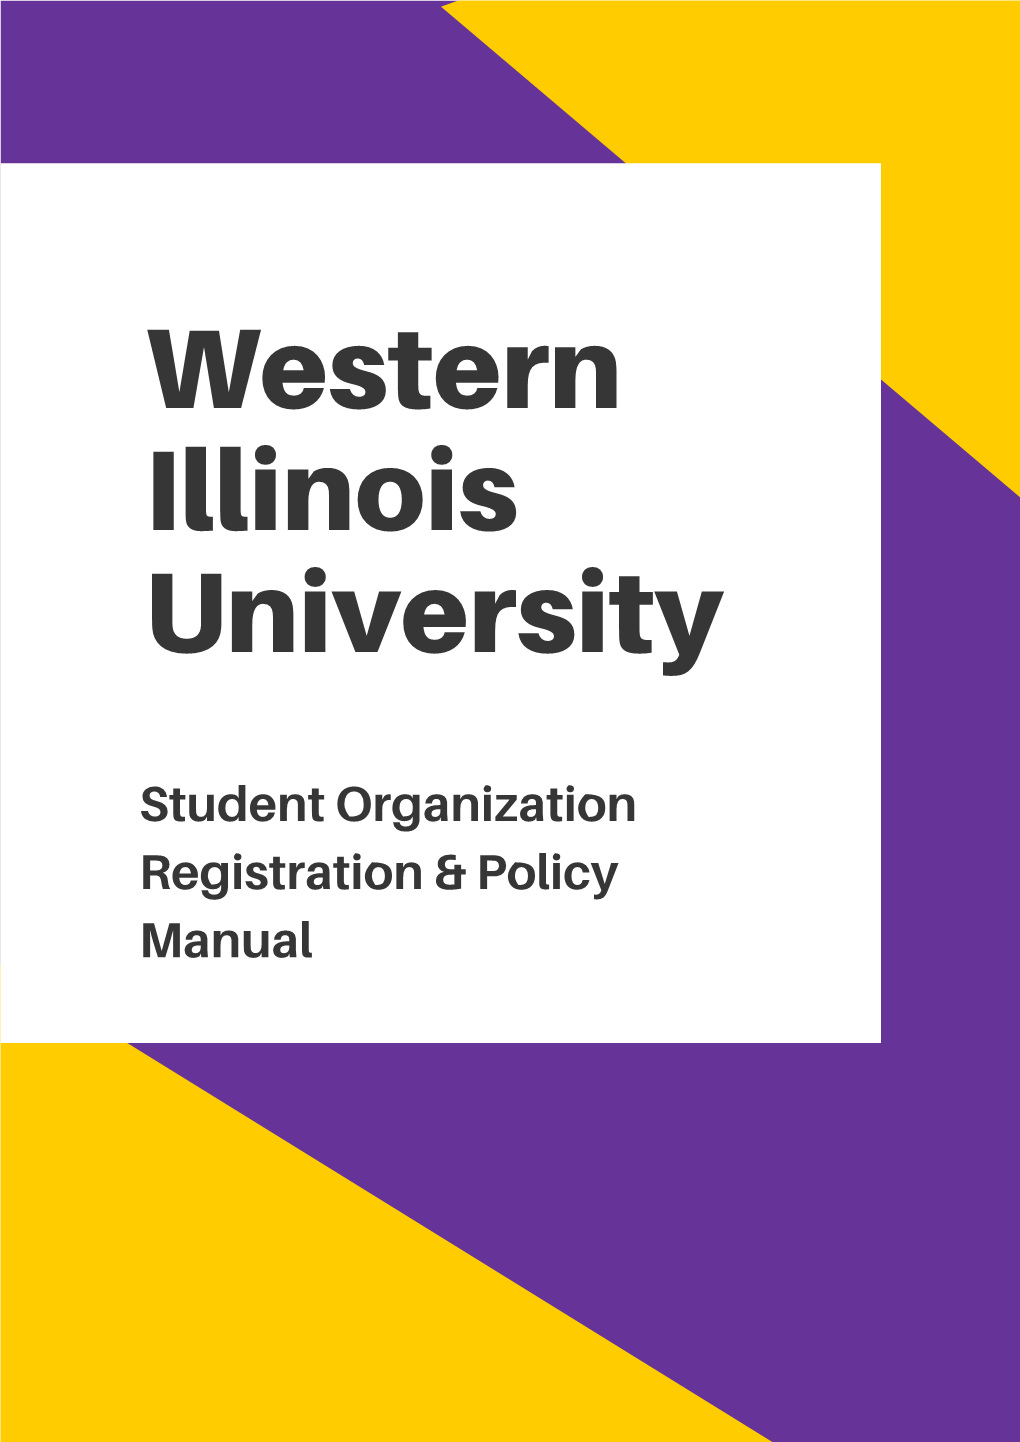 Student Organization Registration & Policy